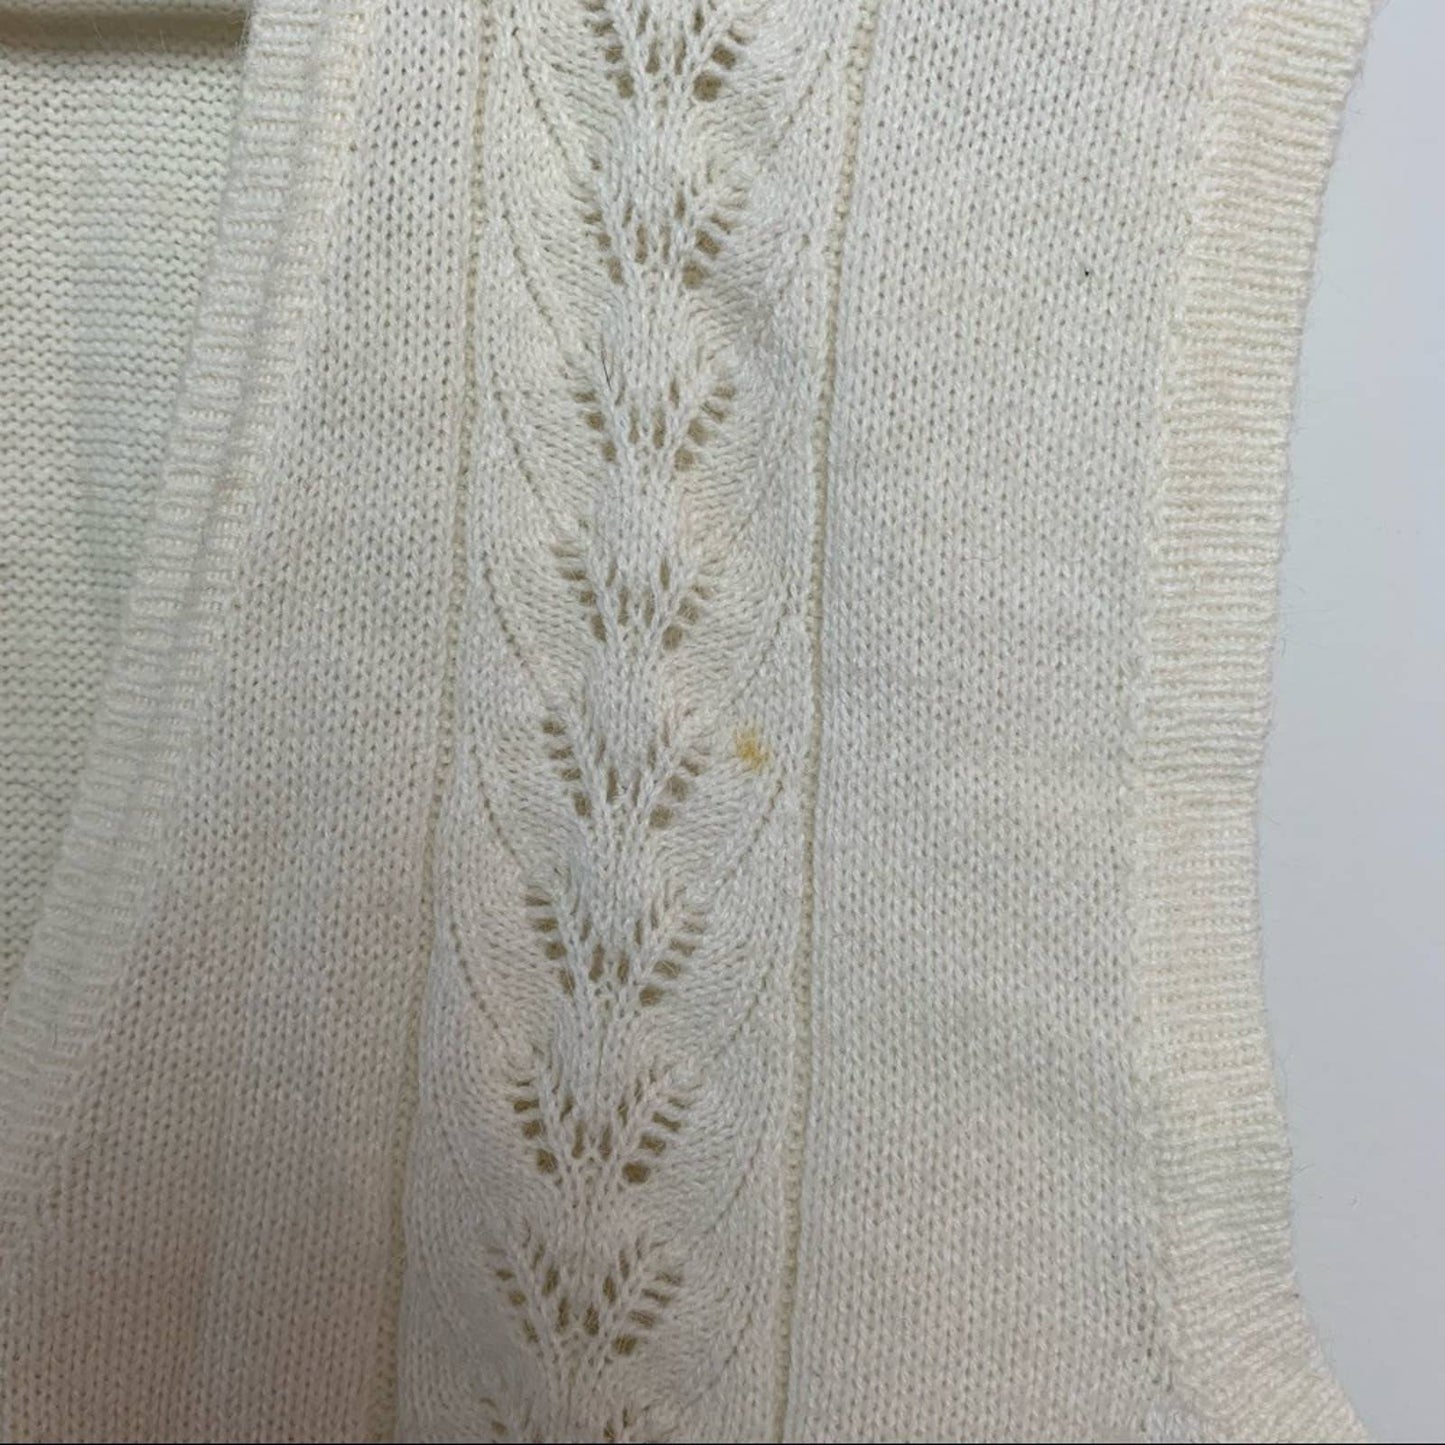 80s Tan F Jay Cream Knit Sweater Vest Pearl Buttons XL Grandpa Academia